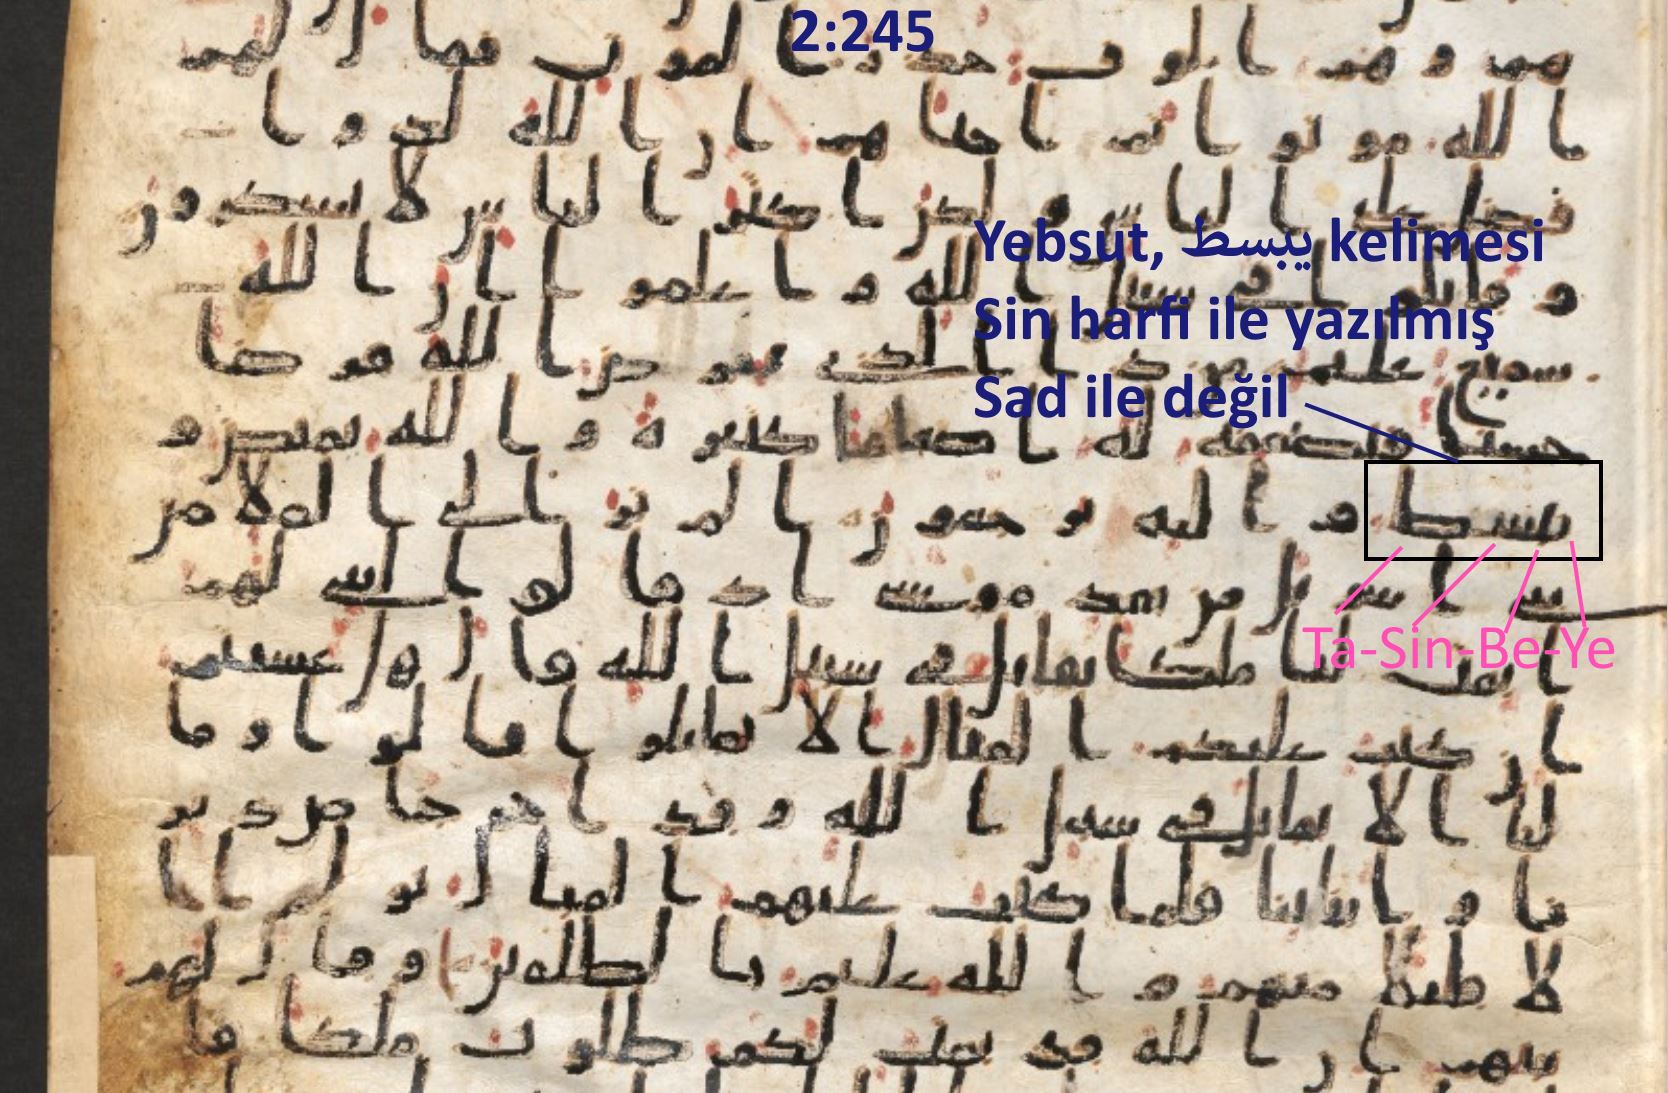 2 245 yebsut kelimesi sin harfi ile yazilmis Berlin, Staatsbibliothek Wetzstein II